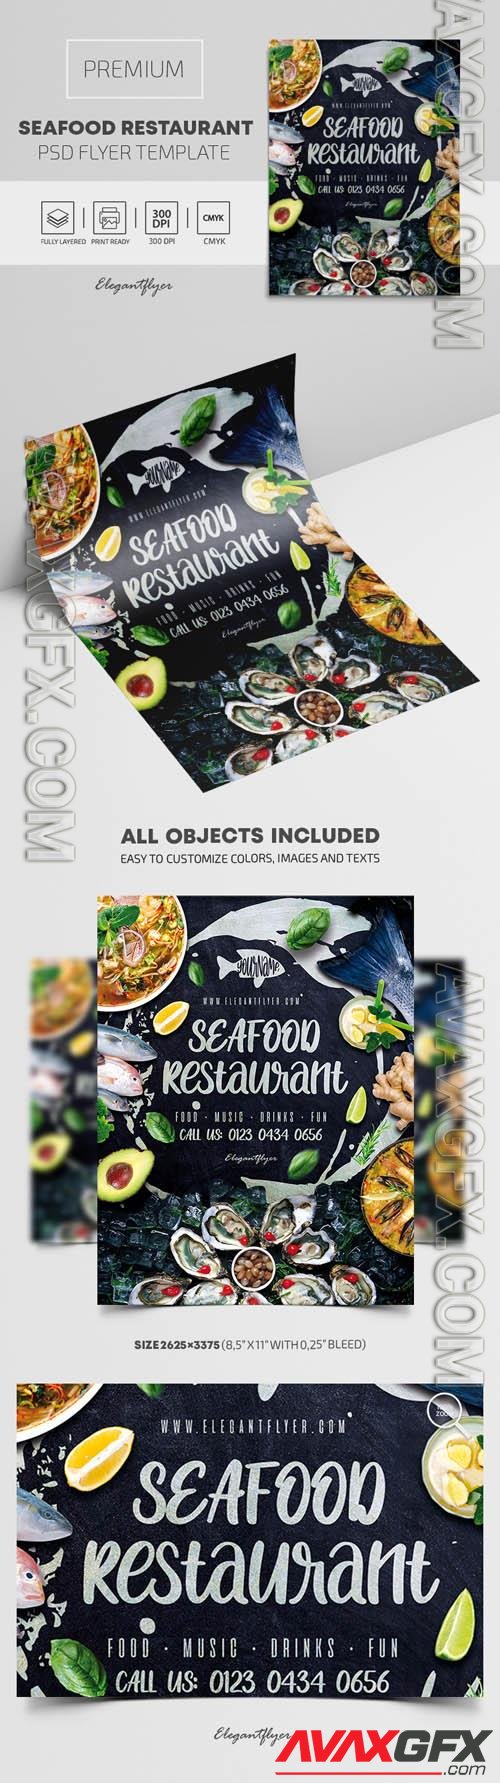 Seafood Restaurant Premium PSD Flyer Template